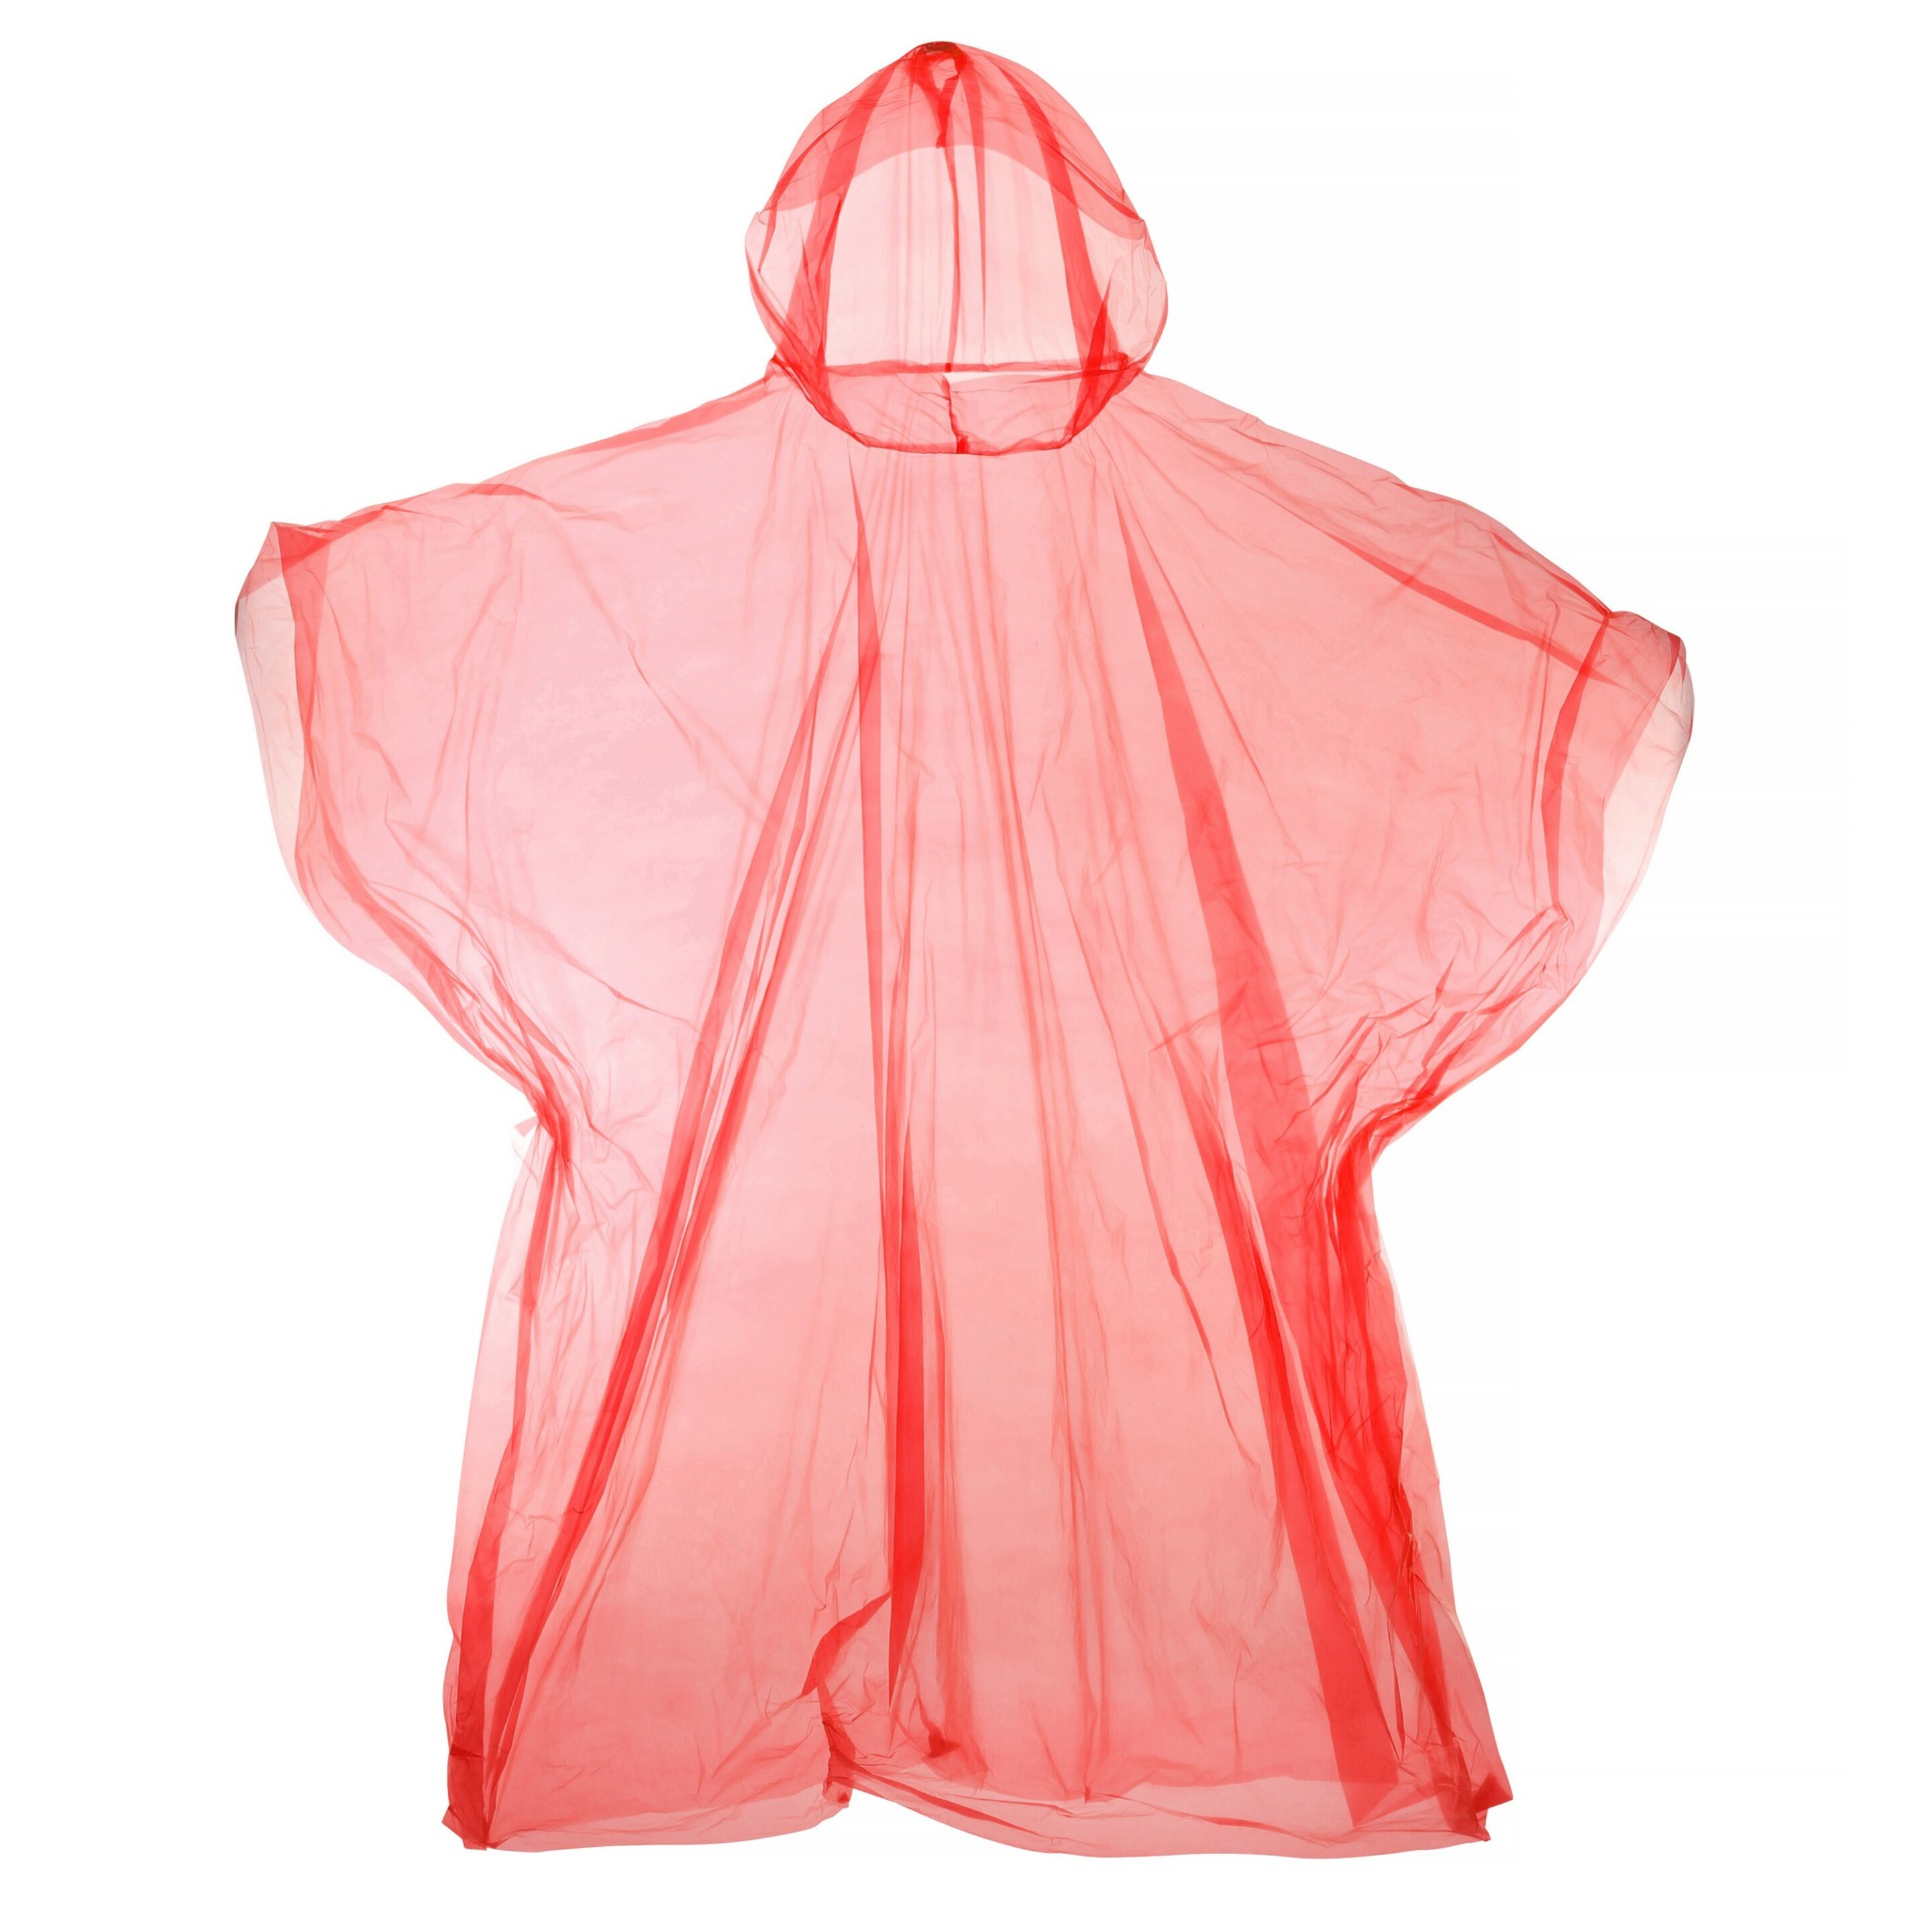 Poncho Reutilizable De Plástico Con Capucha Universal Textiles - rojo - 